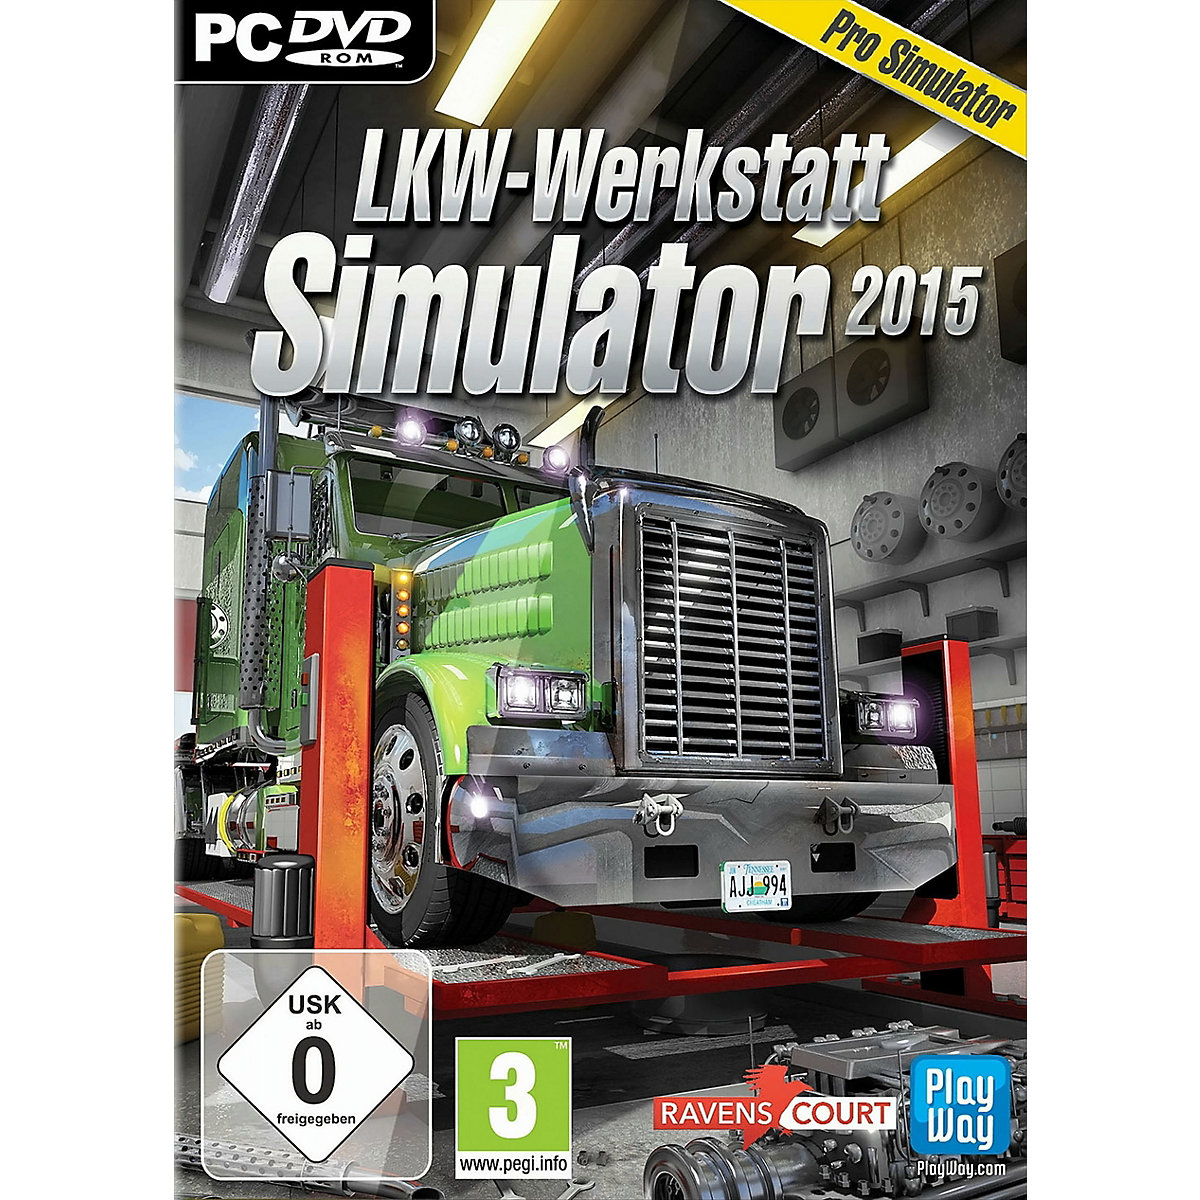 LKW-Werkstatt Simulator 2015